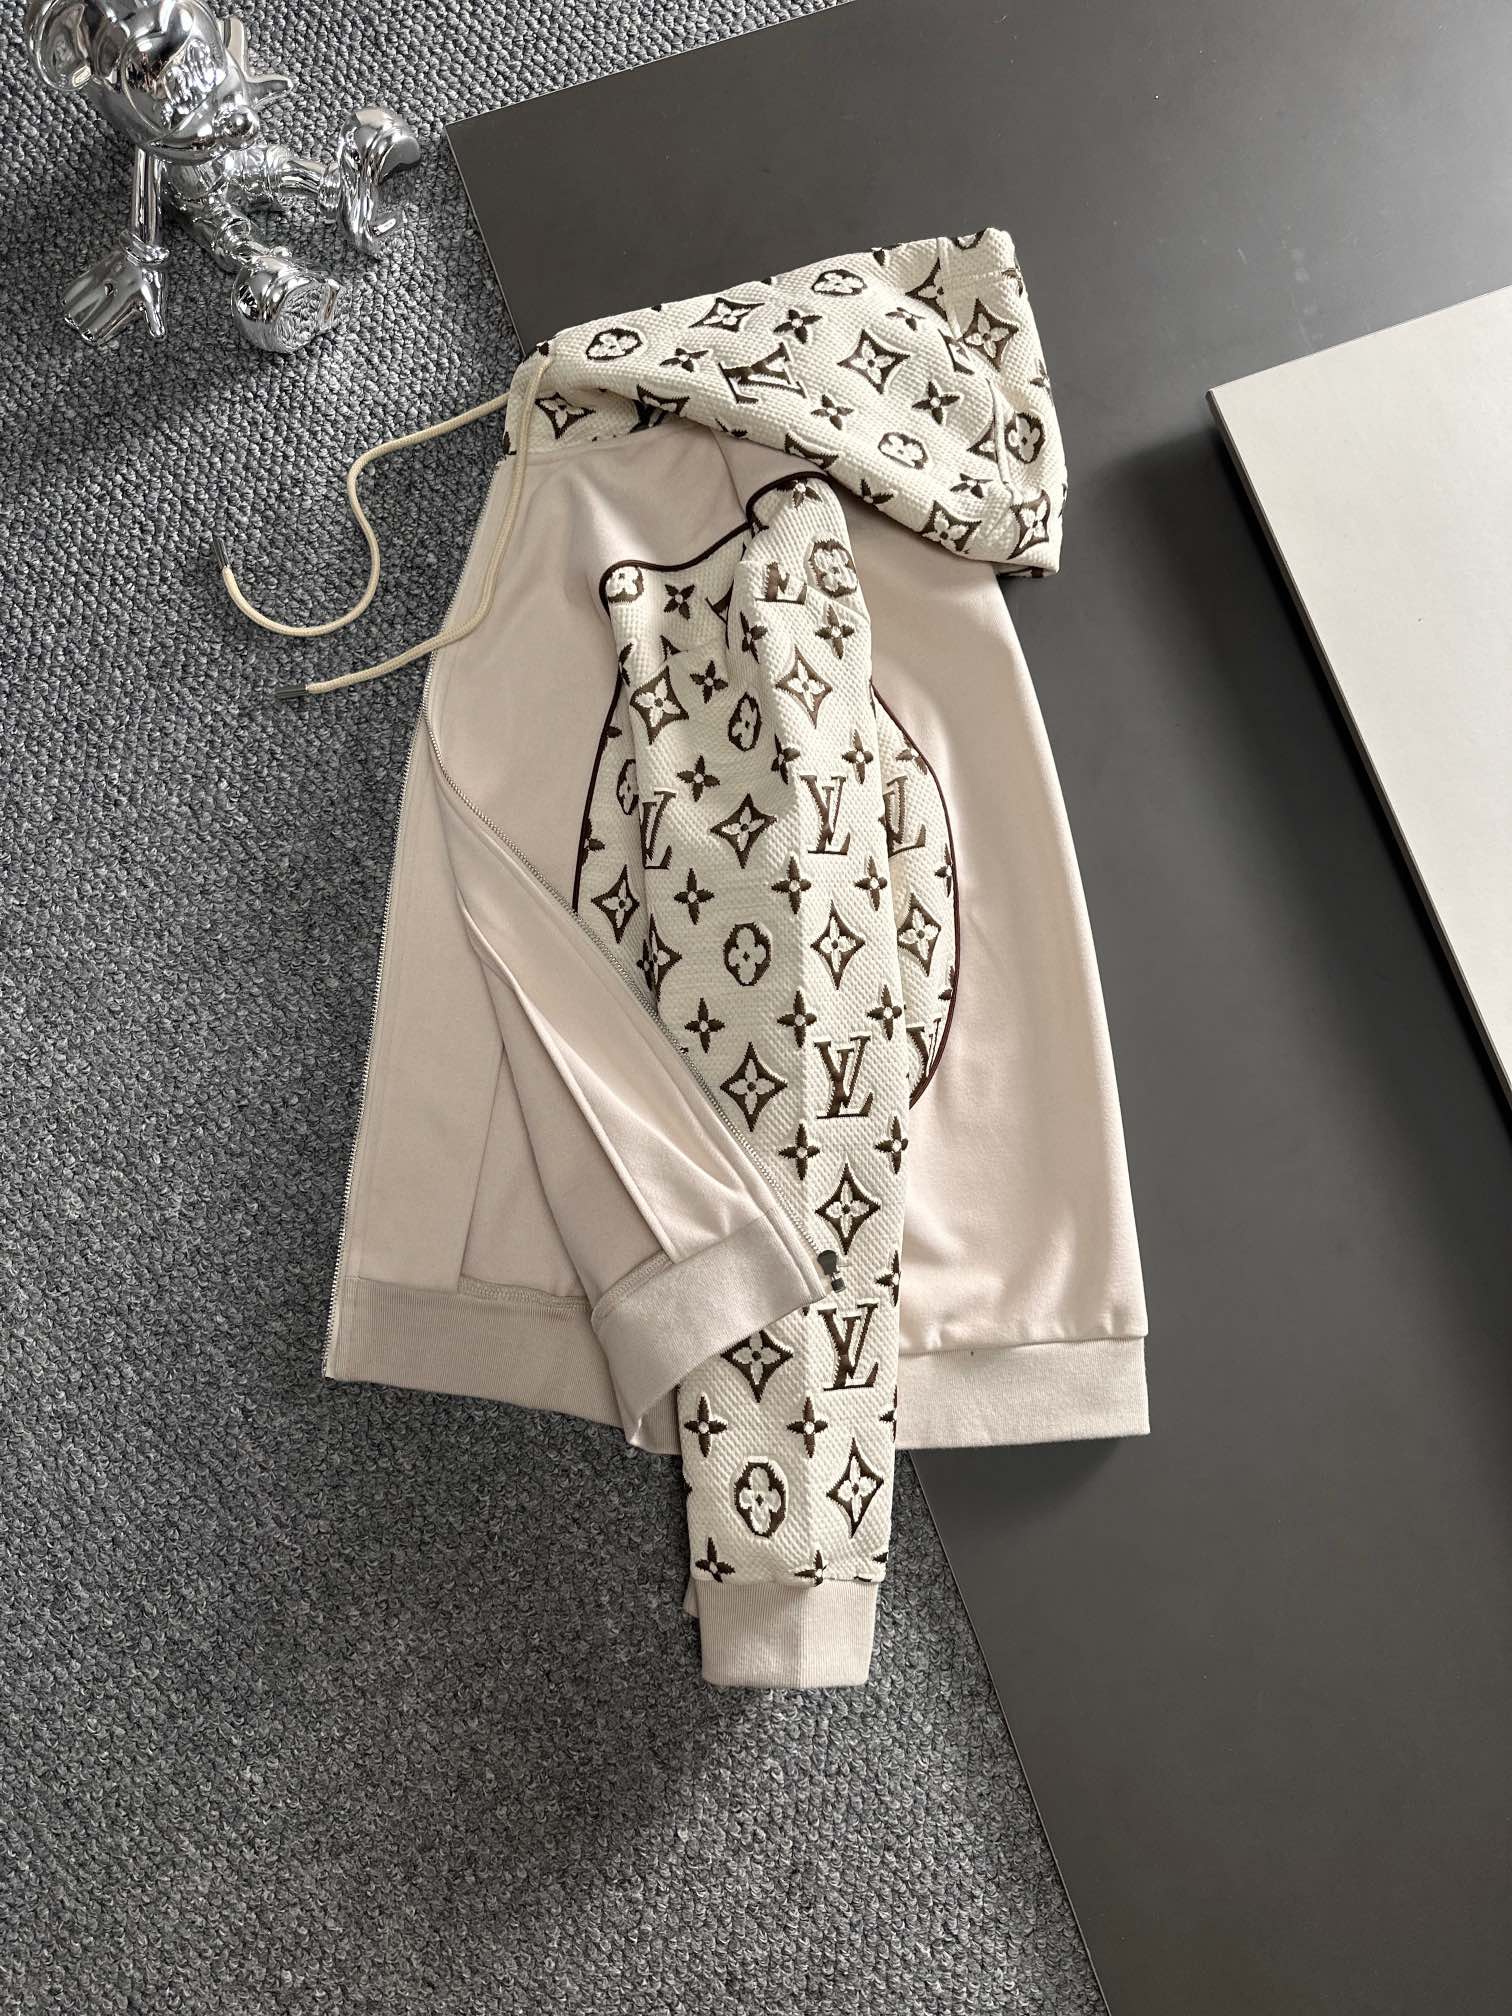 Louis Vuitton Cotton Blend Tracksuits Unisex # 274282, cheap LV Tracksuits, only $76!